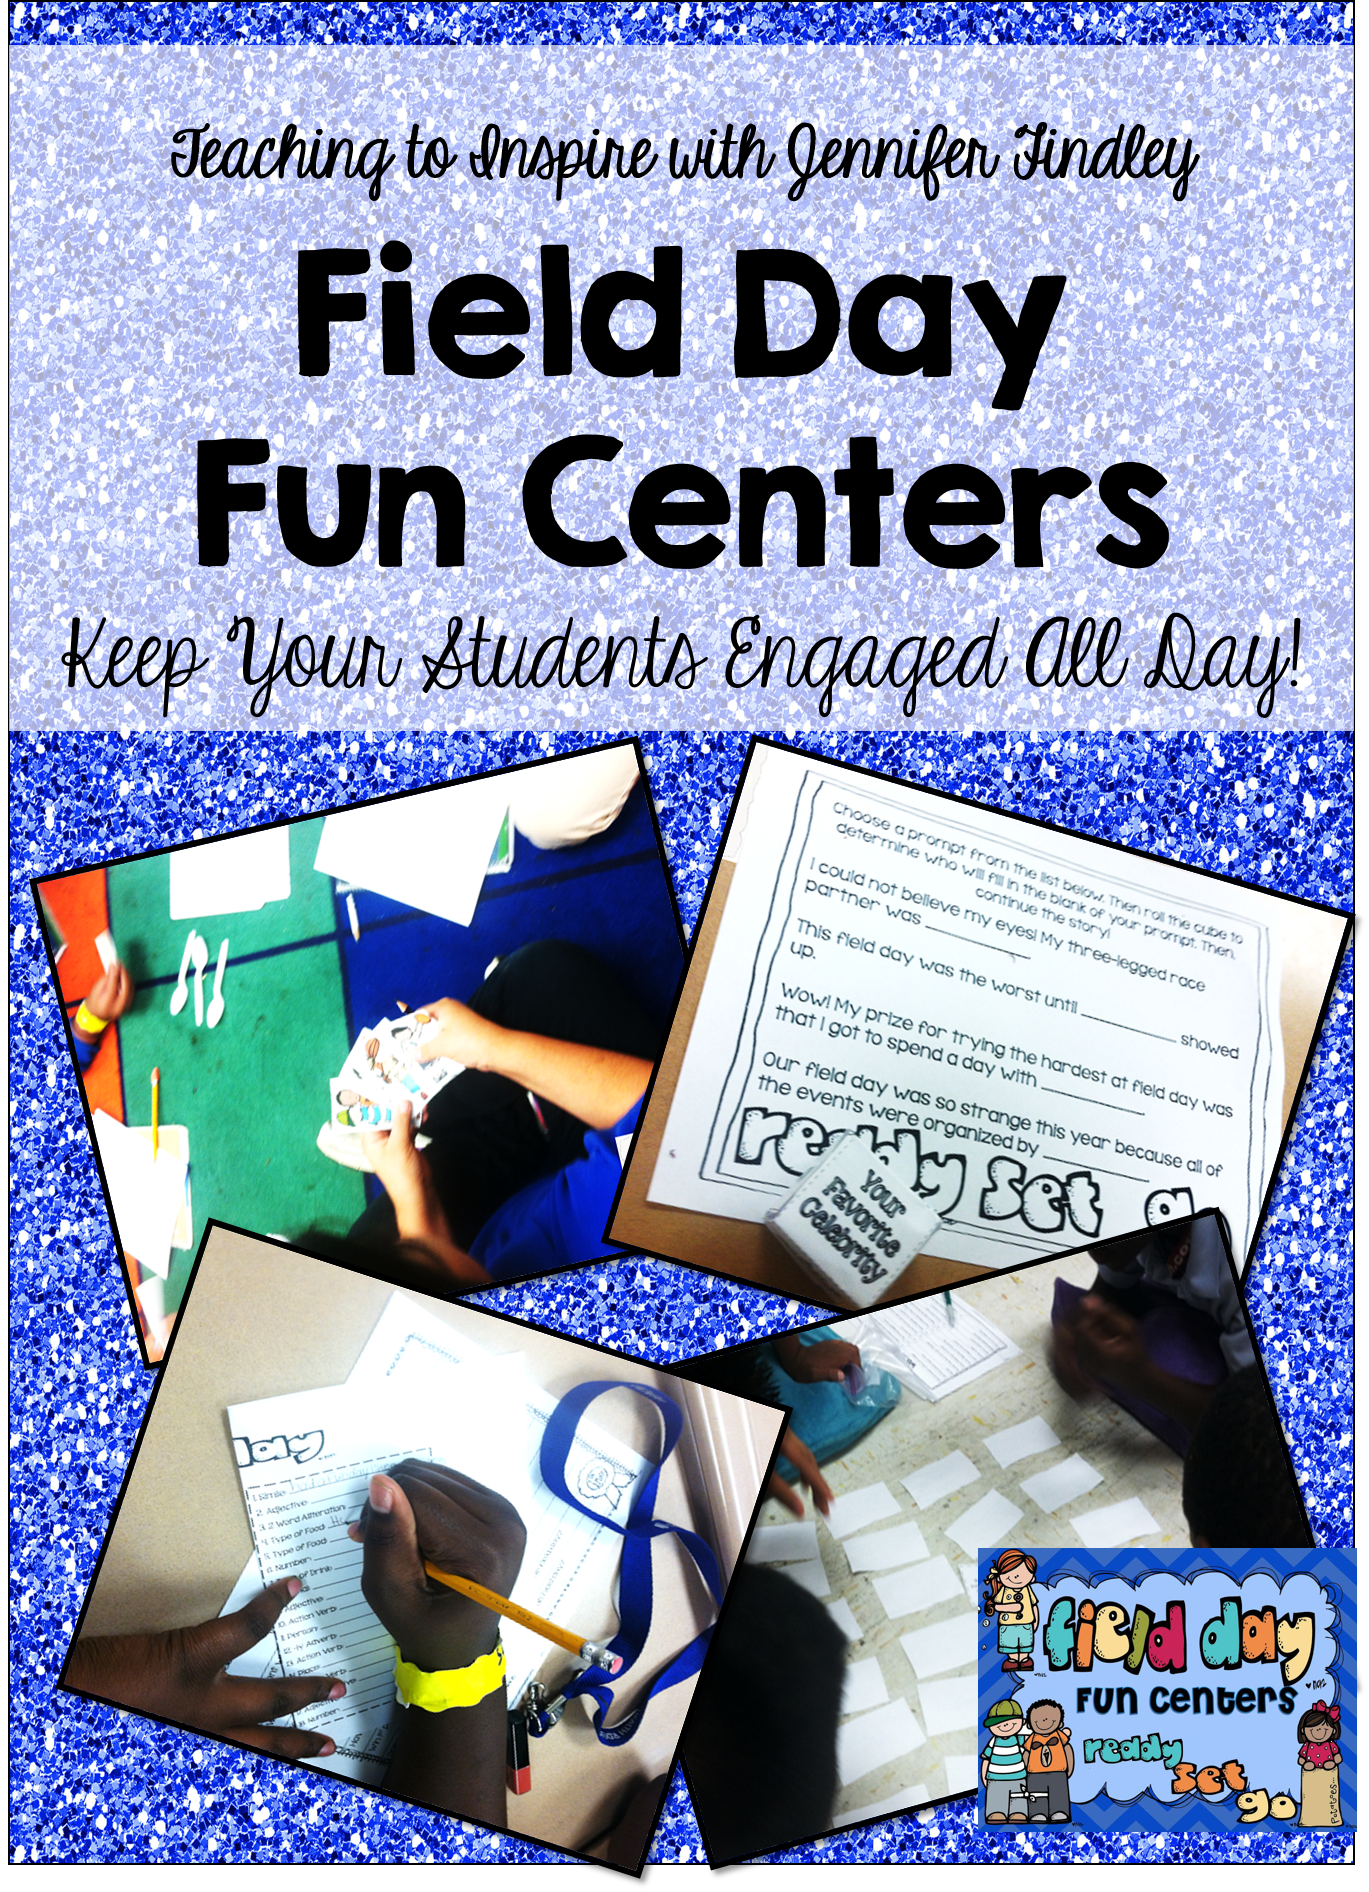 Field Day Fun Centers